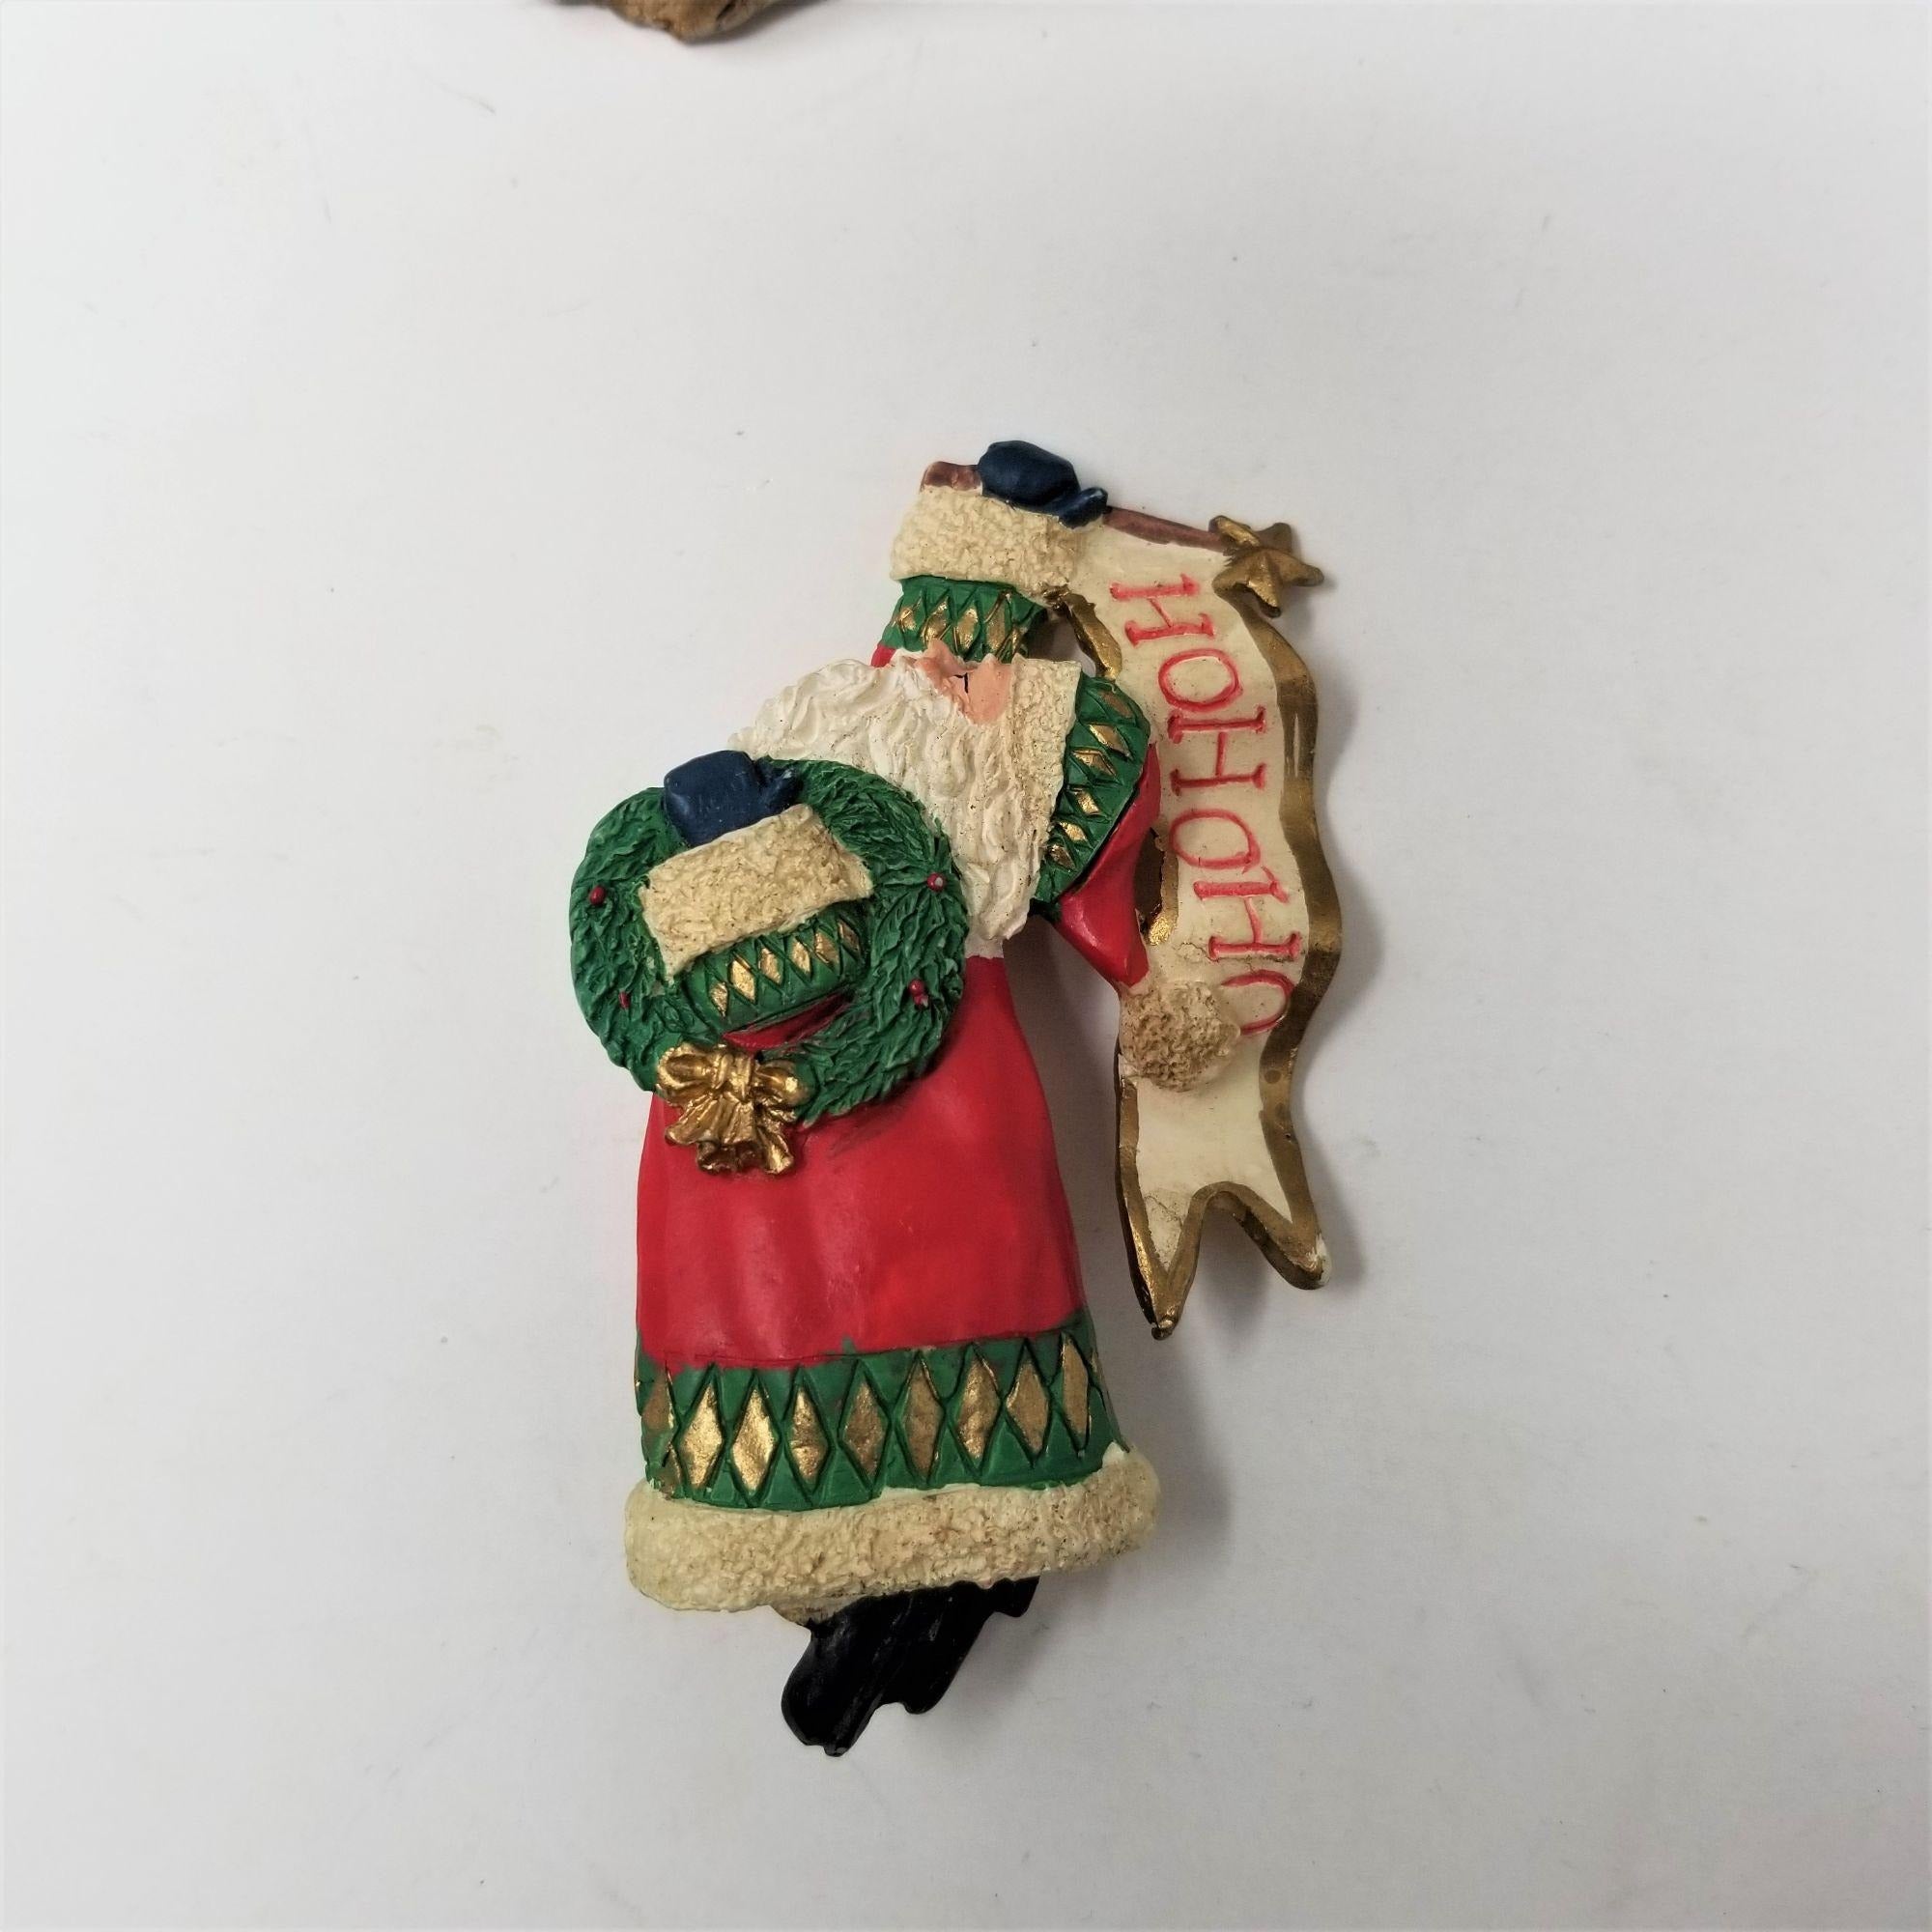 Vintage Style Santa Clause Pin Brooch